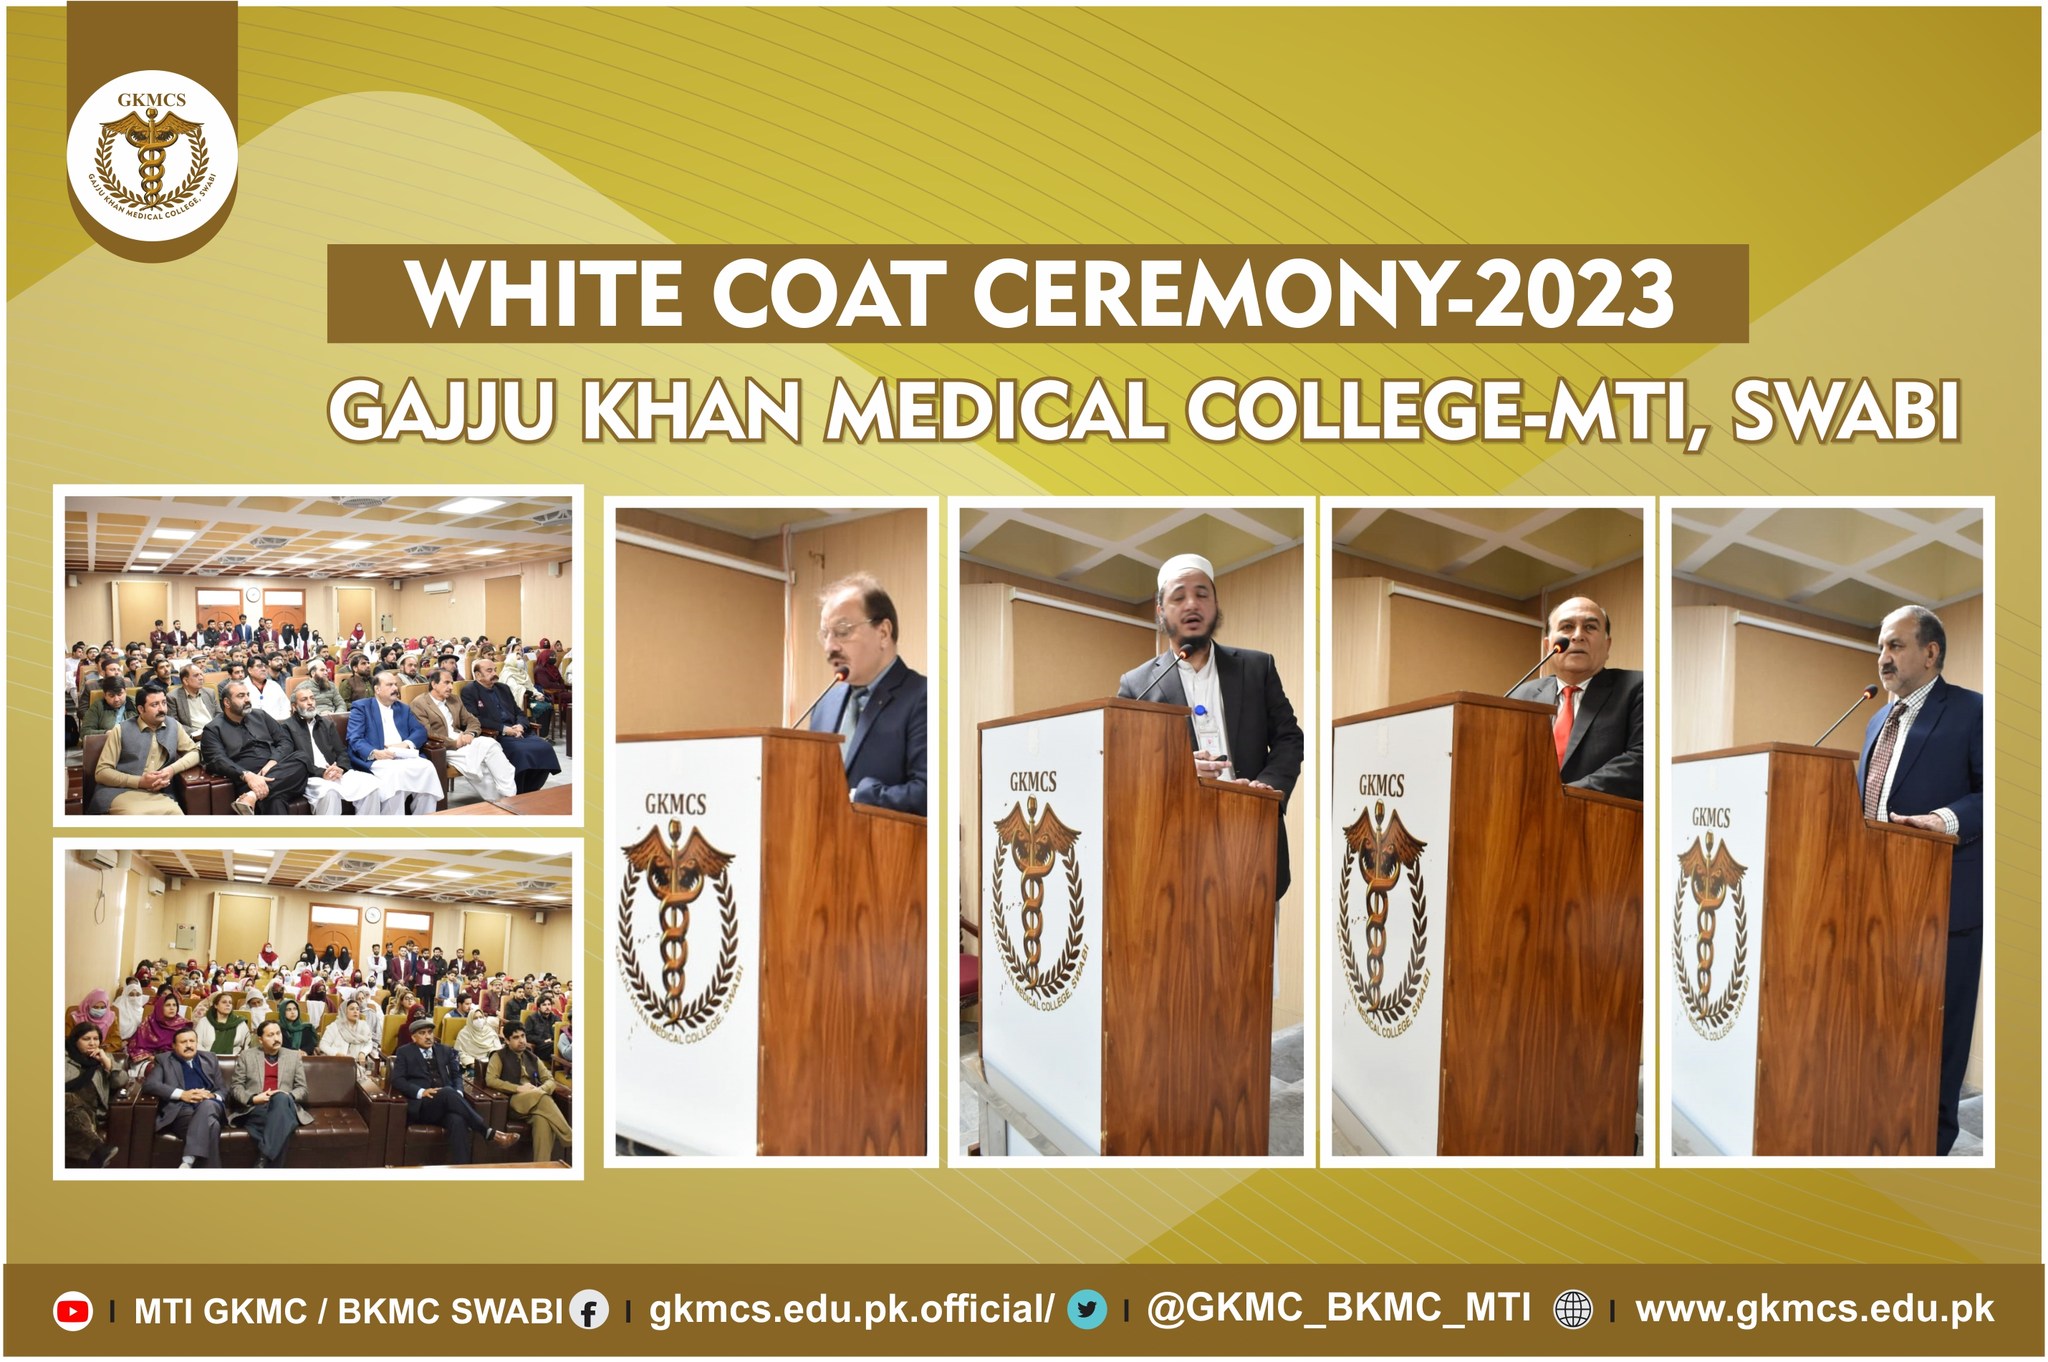 Press Release Media Cell GKMC-MTI, 13 February 2023 White coat / Oath-Taking Ceremony Held at GKMC-MTI SWABI